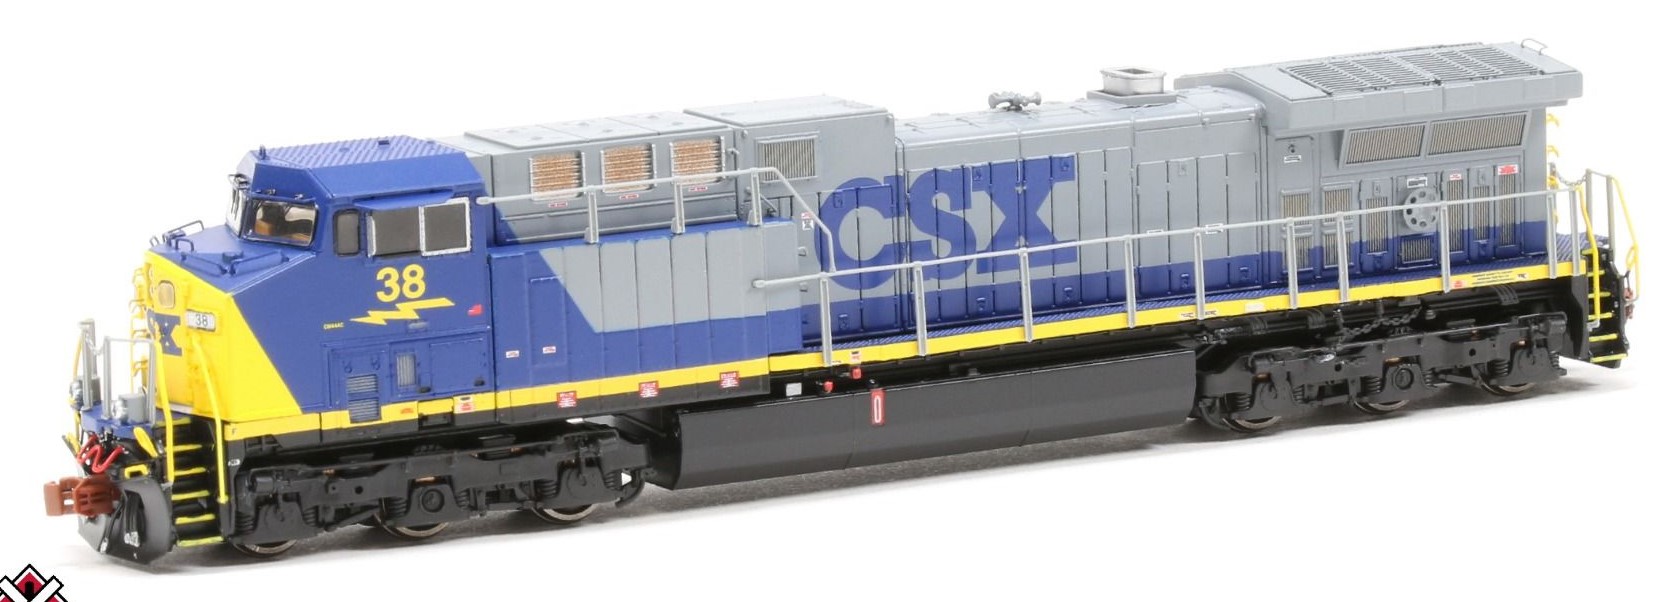 ScaleTrains Rivet Counter N SXT39101 DCC/ESU LokSound V5 Equipped GE AC4400CW Locomotive CSX 'YN2' Scheme CSX #38